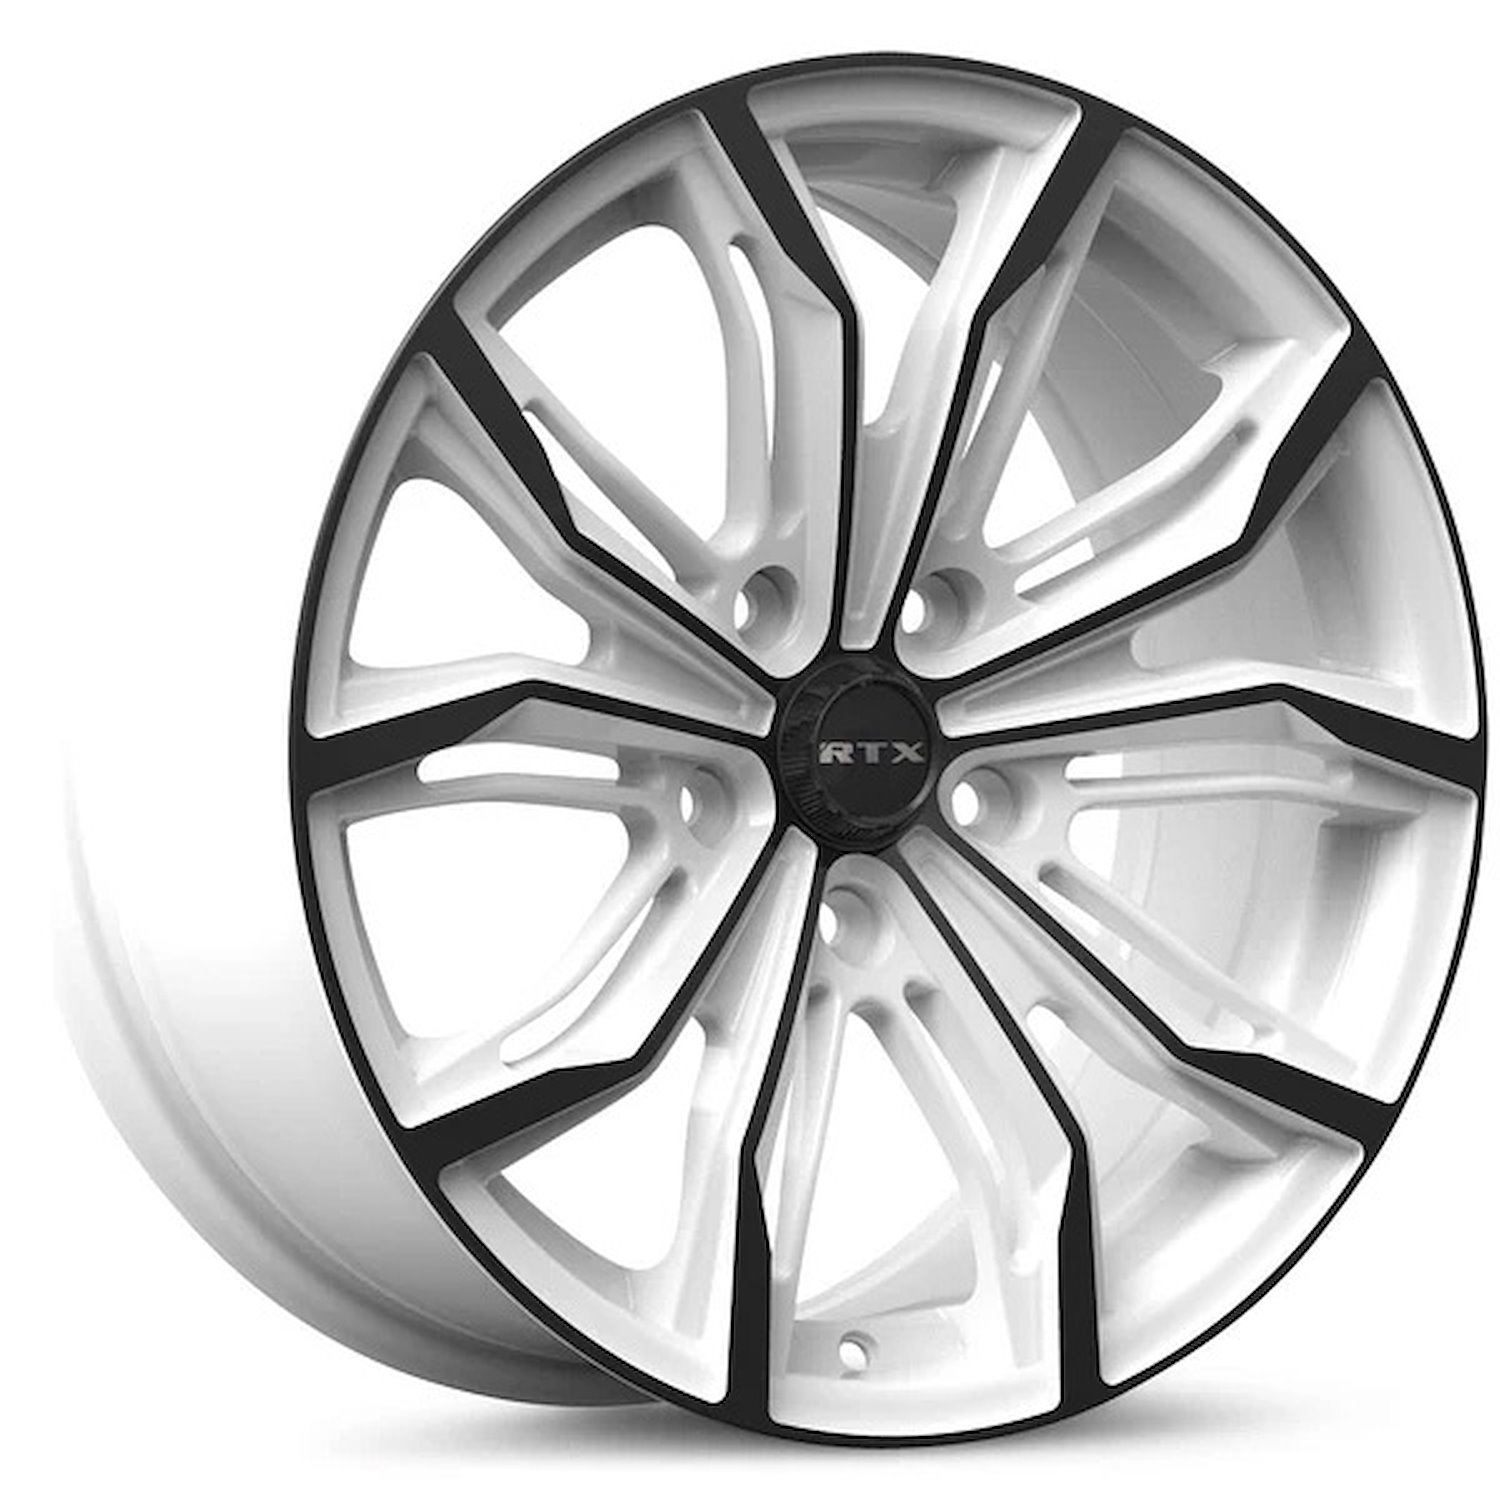 083258 RTX-Series Black Widow Wheel [Size: 18" x 8"] White & Black Finish